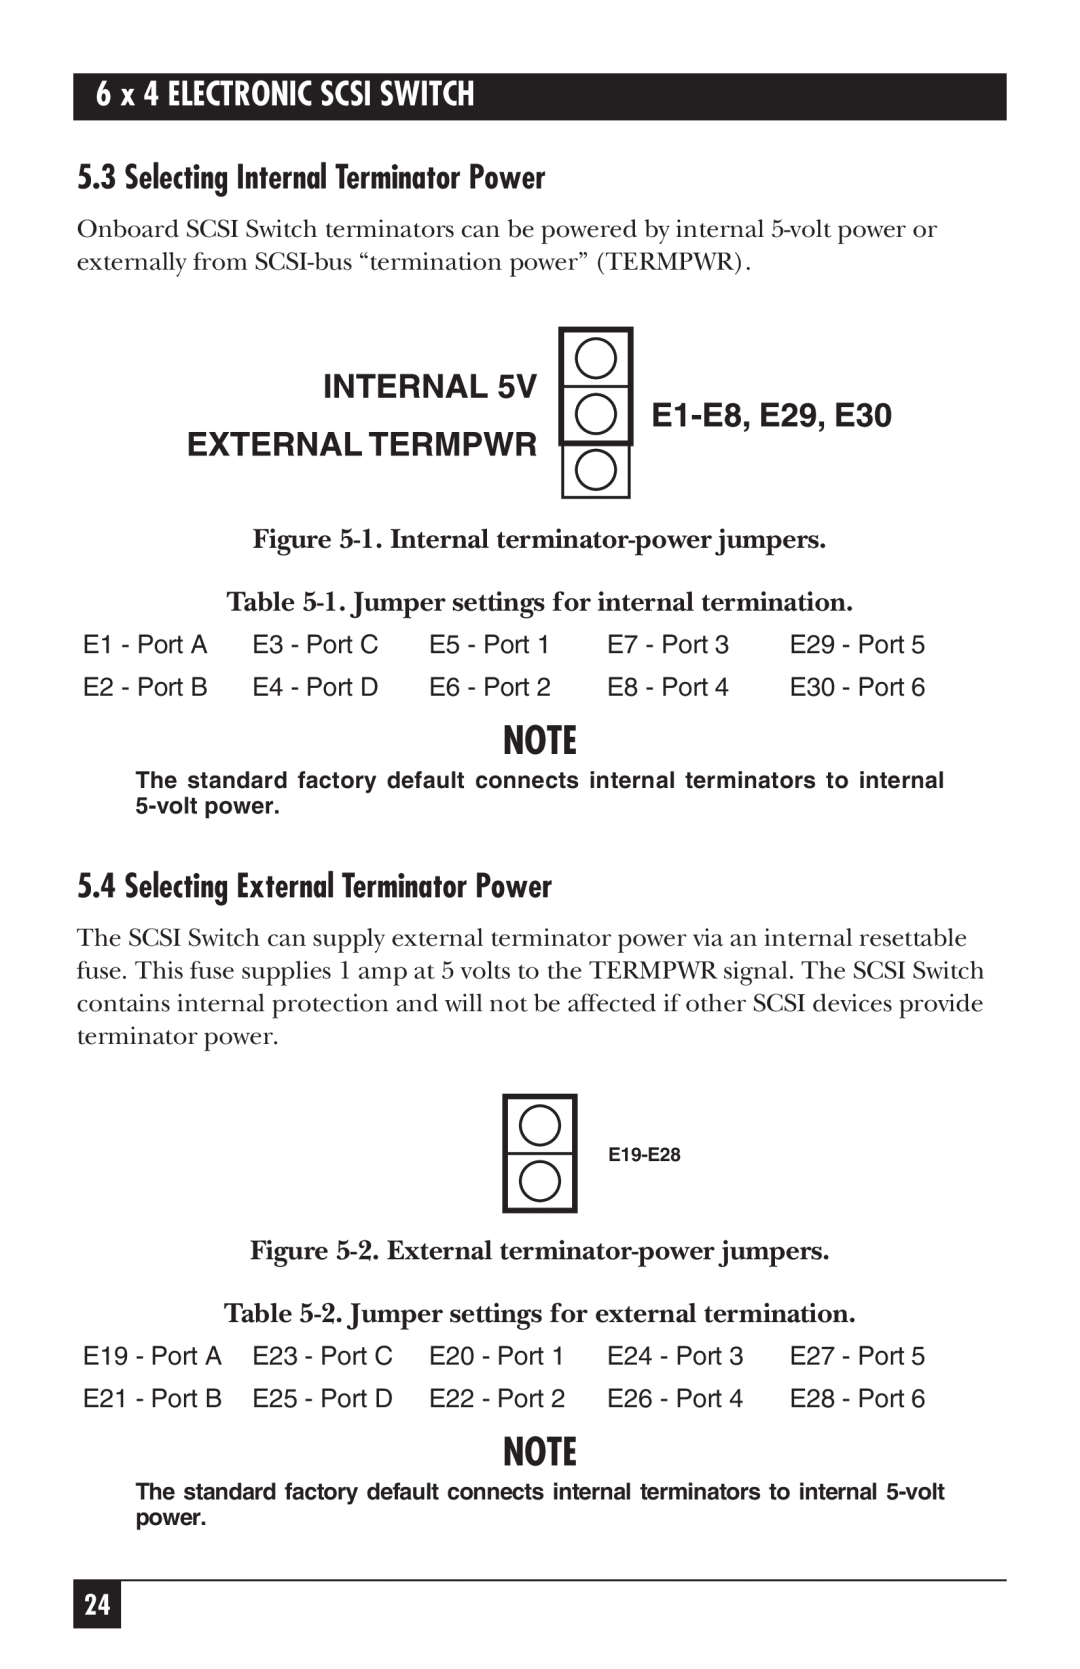 Black Box SW487A-R2 Selecting Internal Terminator Power, Selecting External Terminator Power, 6 x 4 ELECTRONIC SCSI SWITCH 